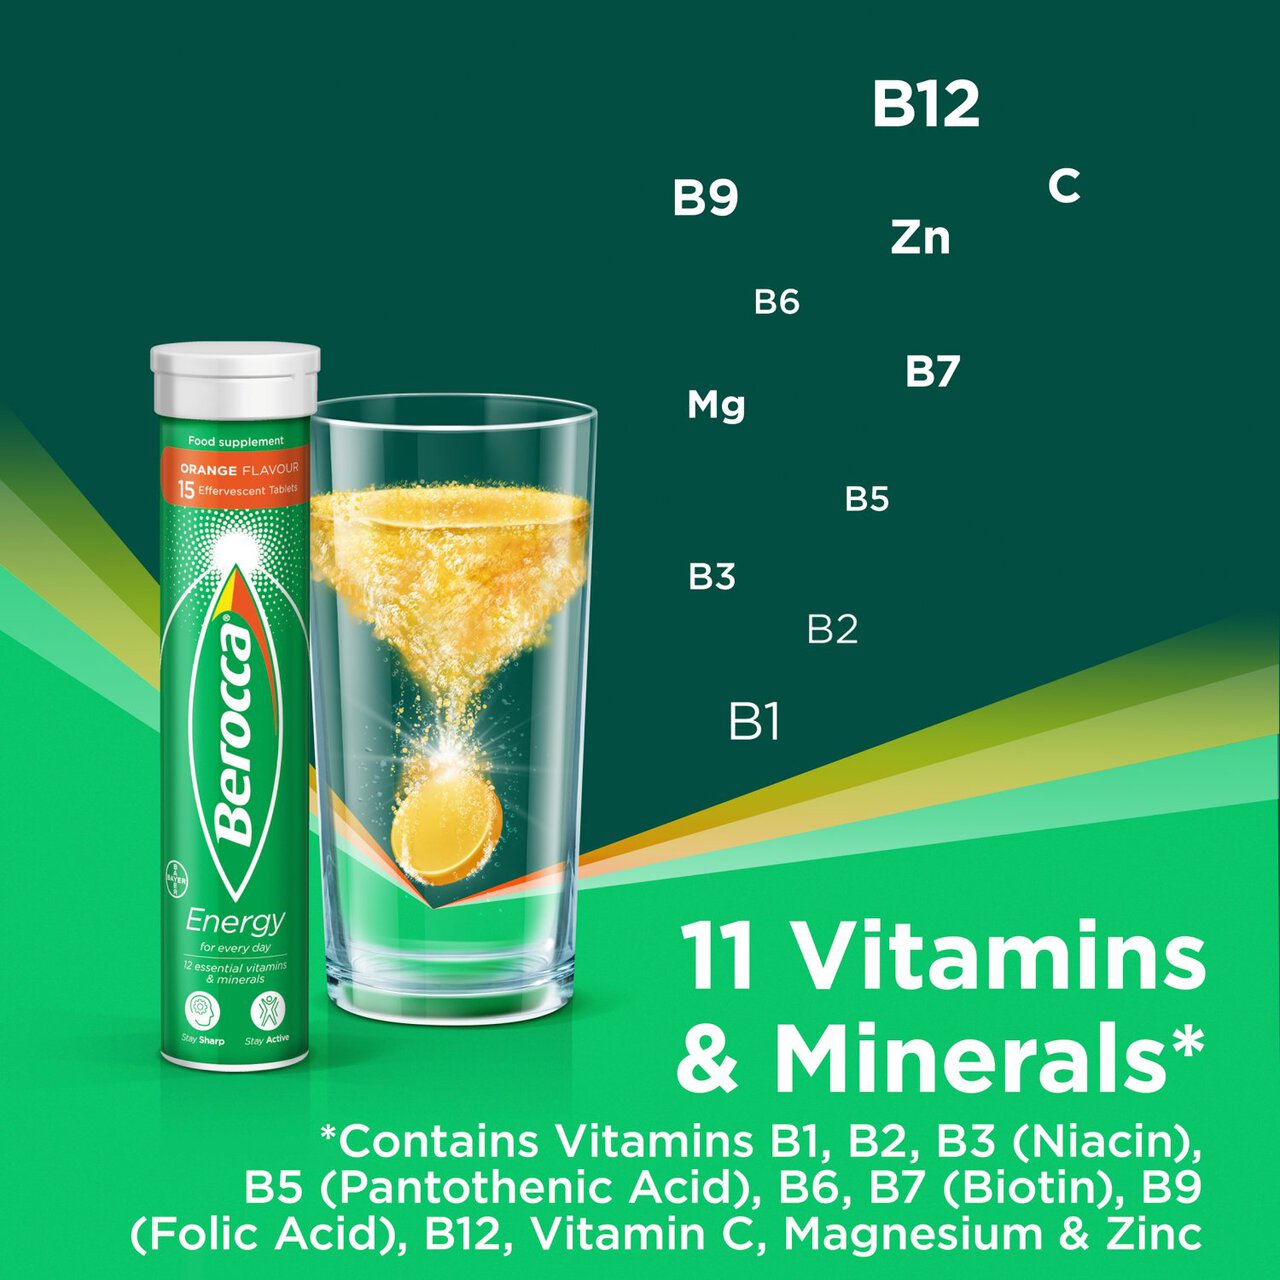 Berocca Orange Energy Vitamin Effervescent Tablets 15 per pack